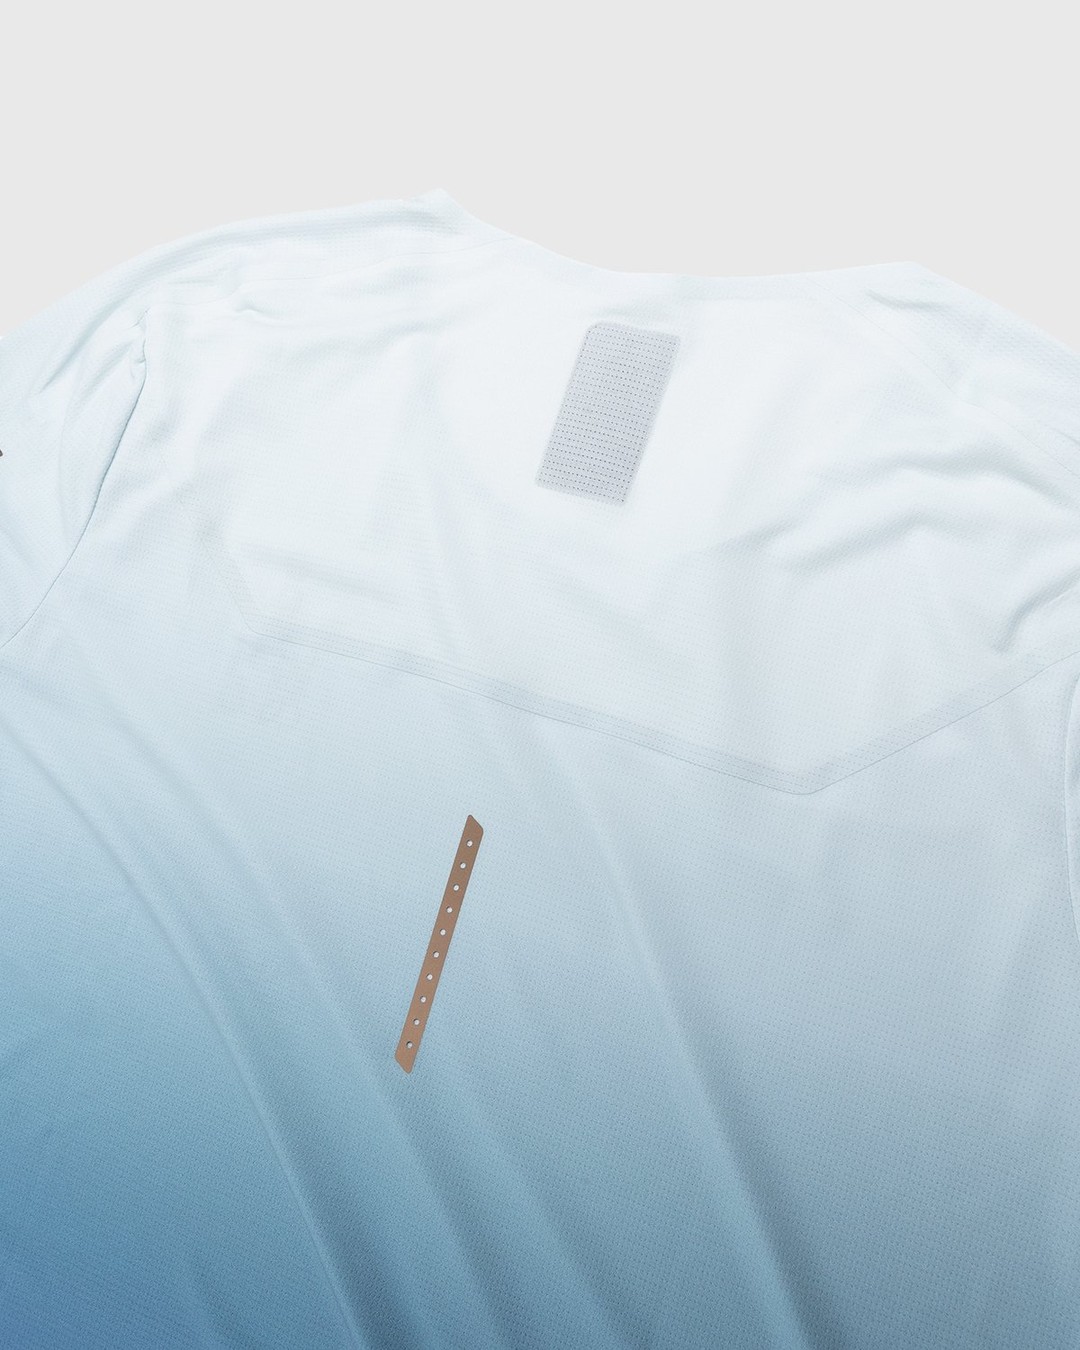 Loewe x On – Women's Performance T-Shirt Gradient Grey - Tops - Blue - Image 3